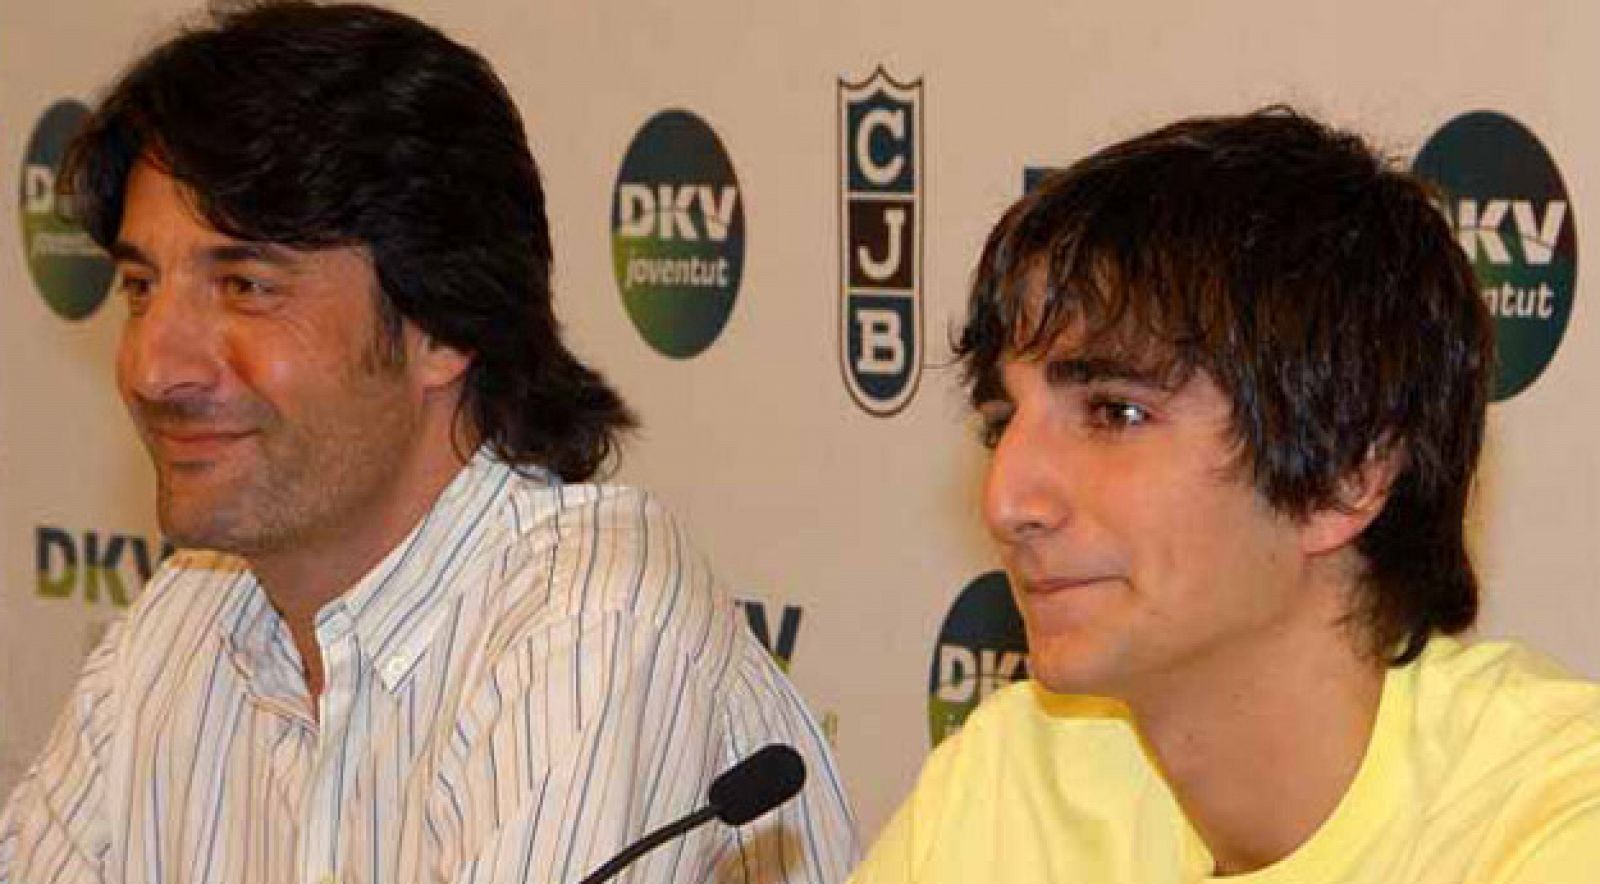 Jordi Villacampa, presidente del DKV Joventut, junto a la joven promesa Ricky Rubio